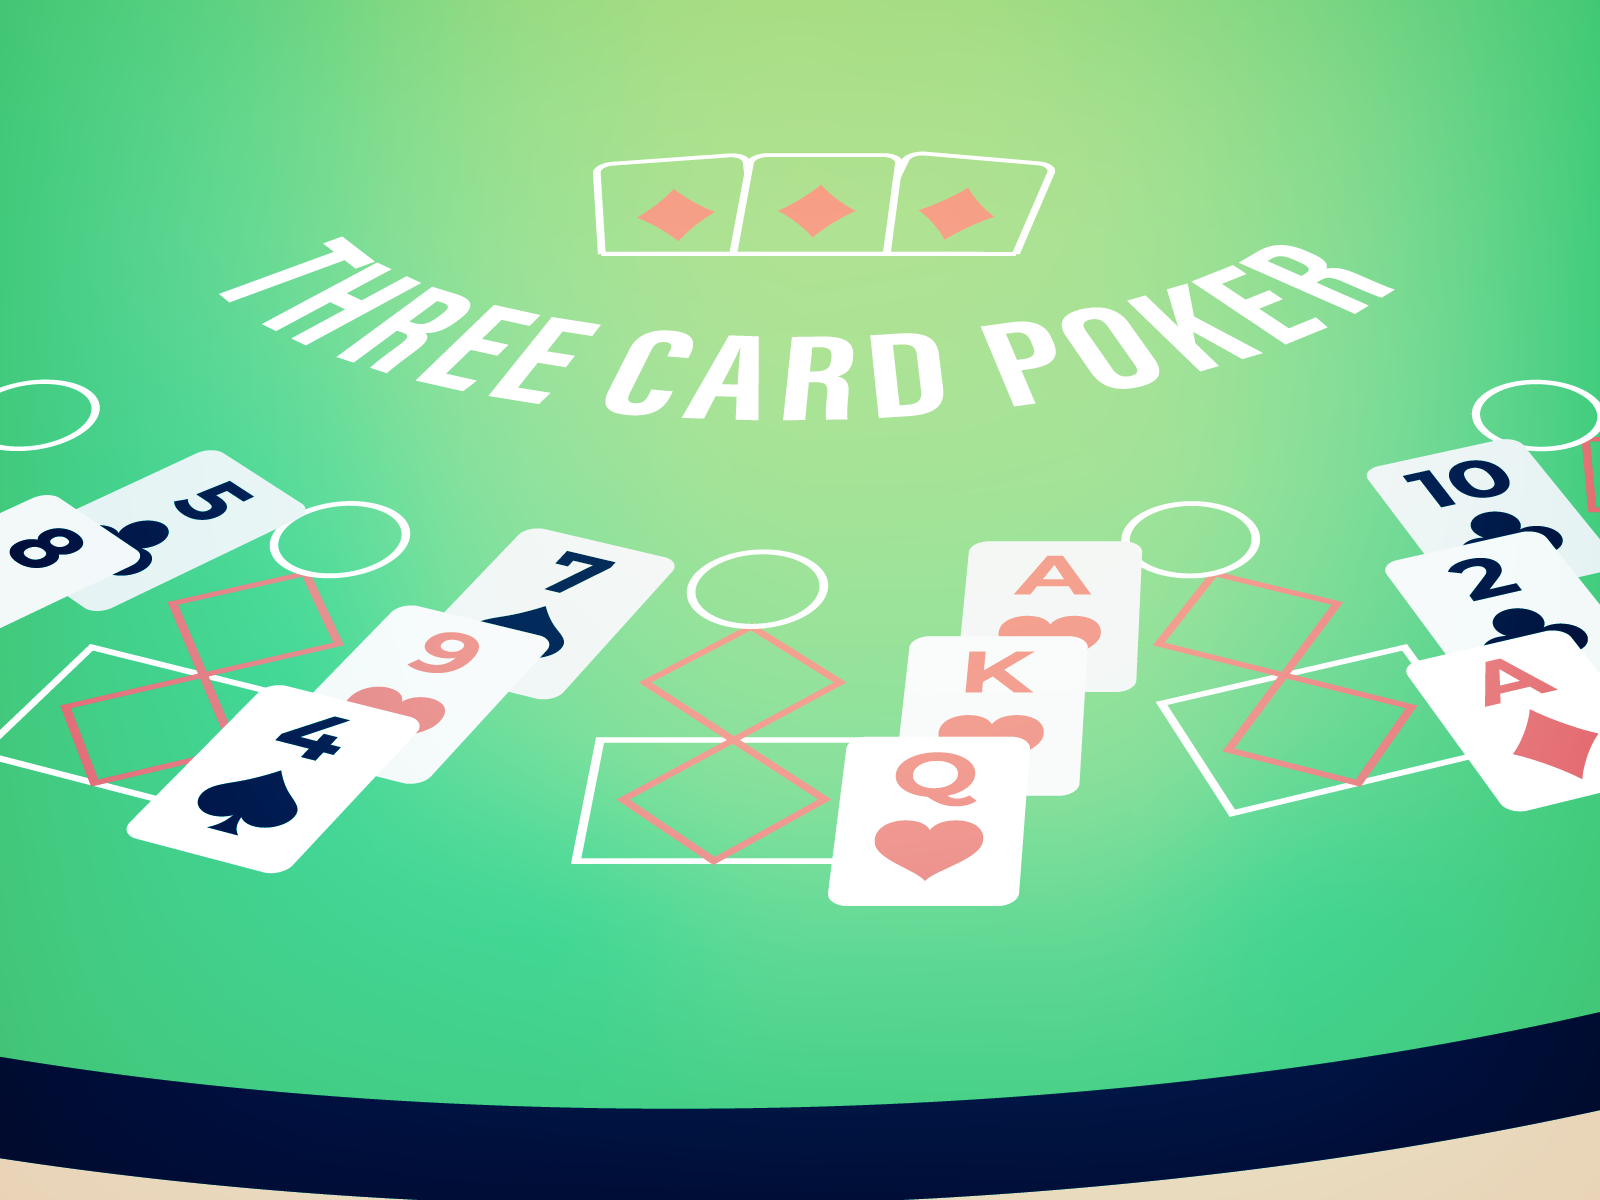 Play Free Three Card Poker Game